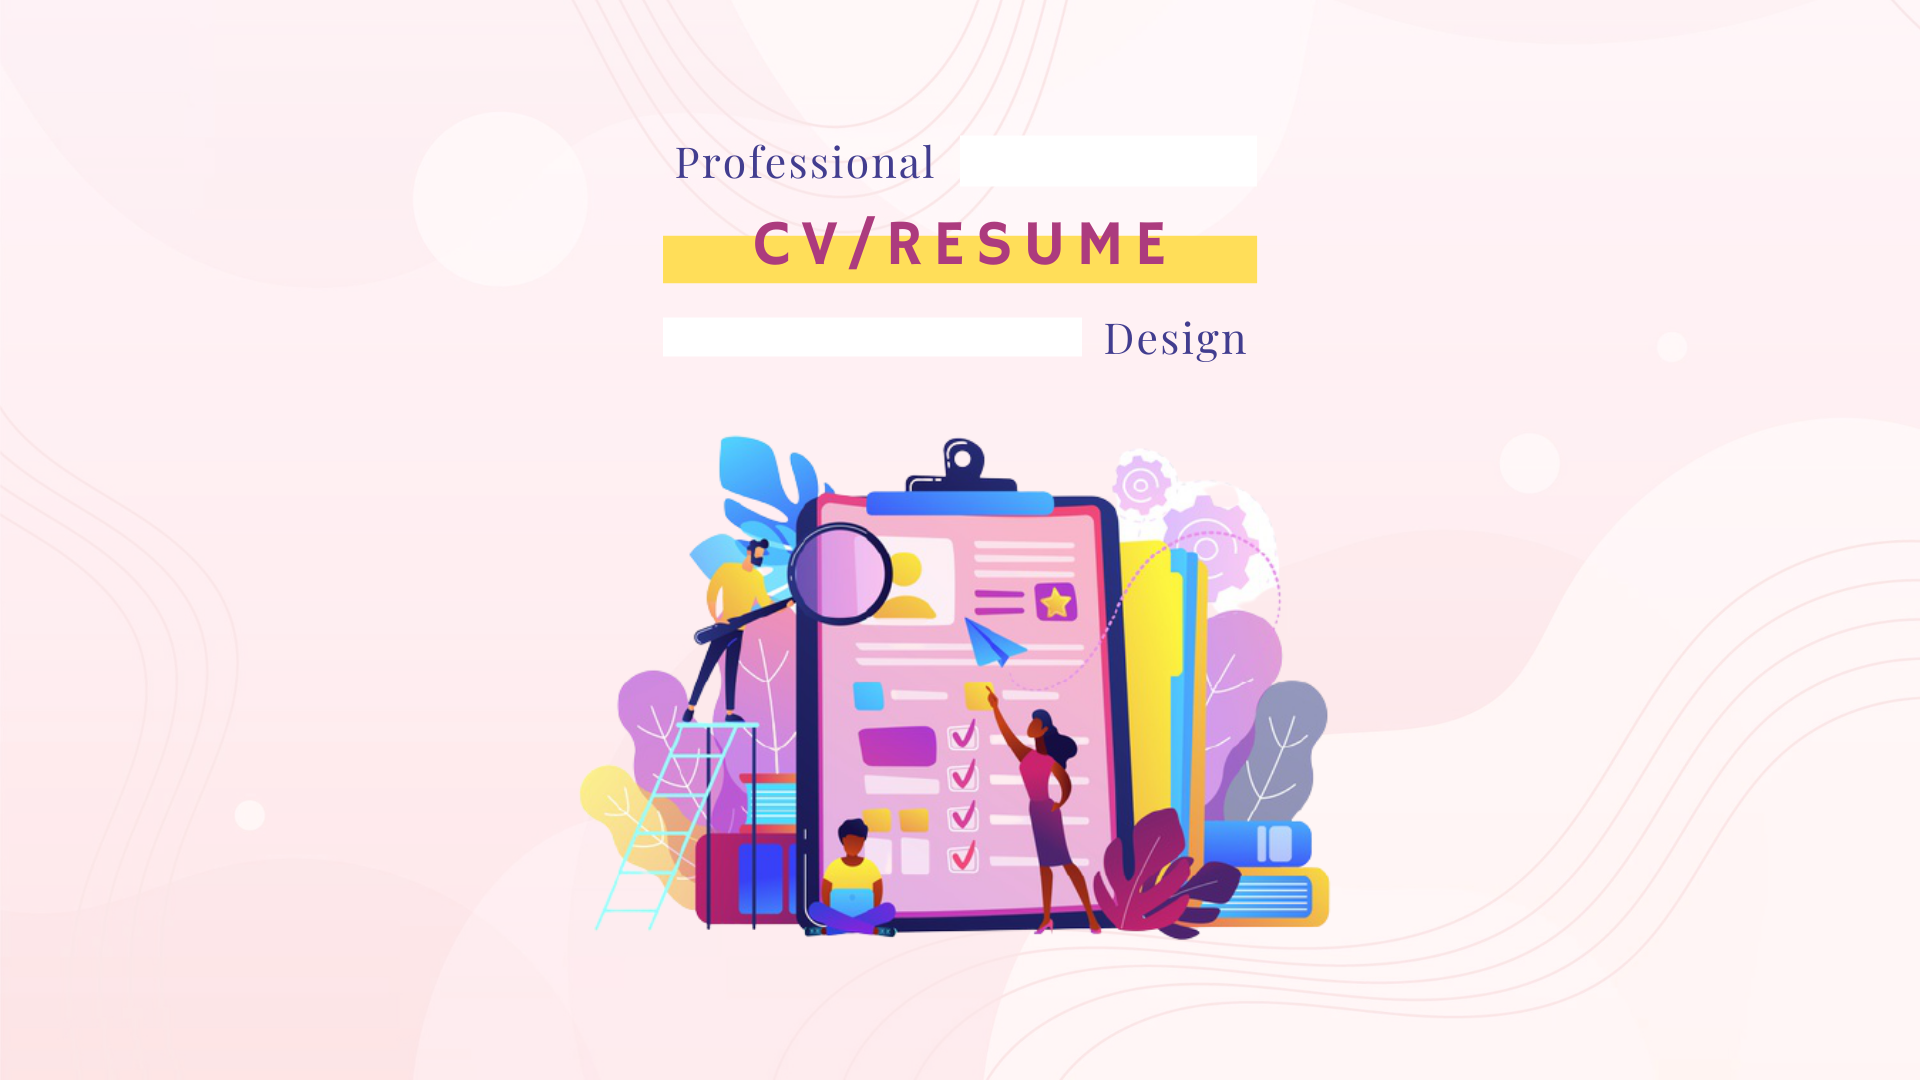 Professional CV/Resume Design course image